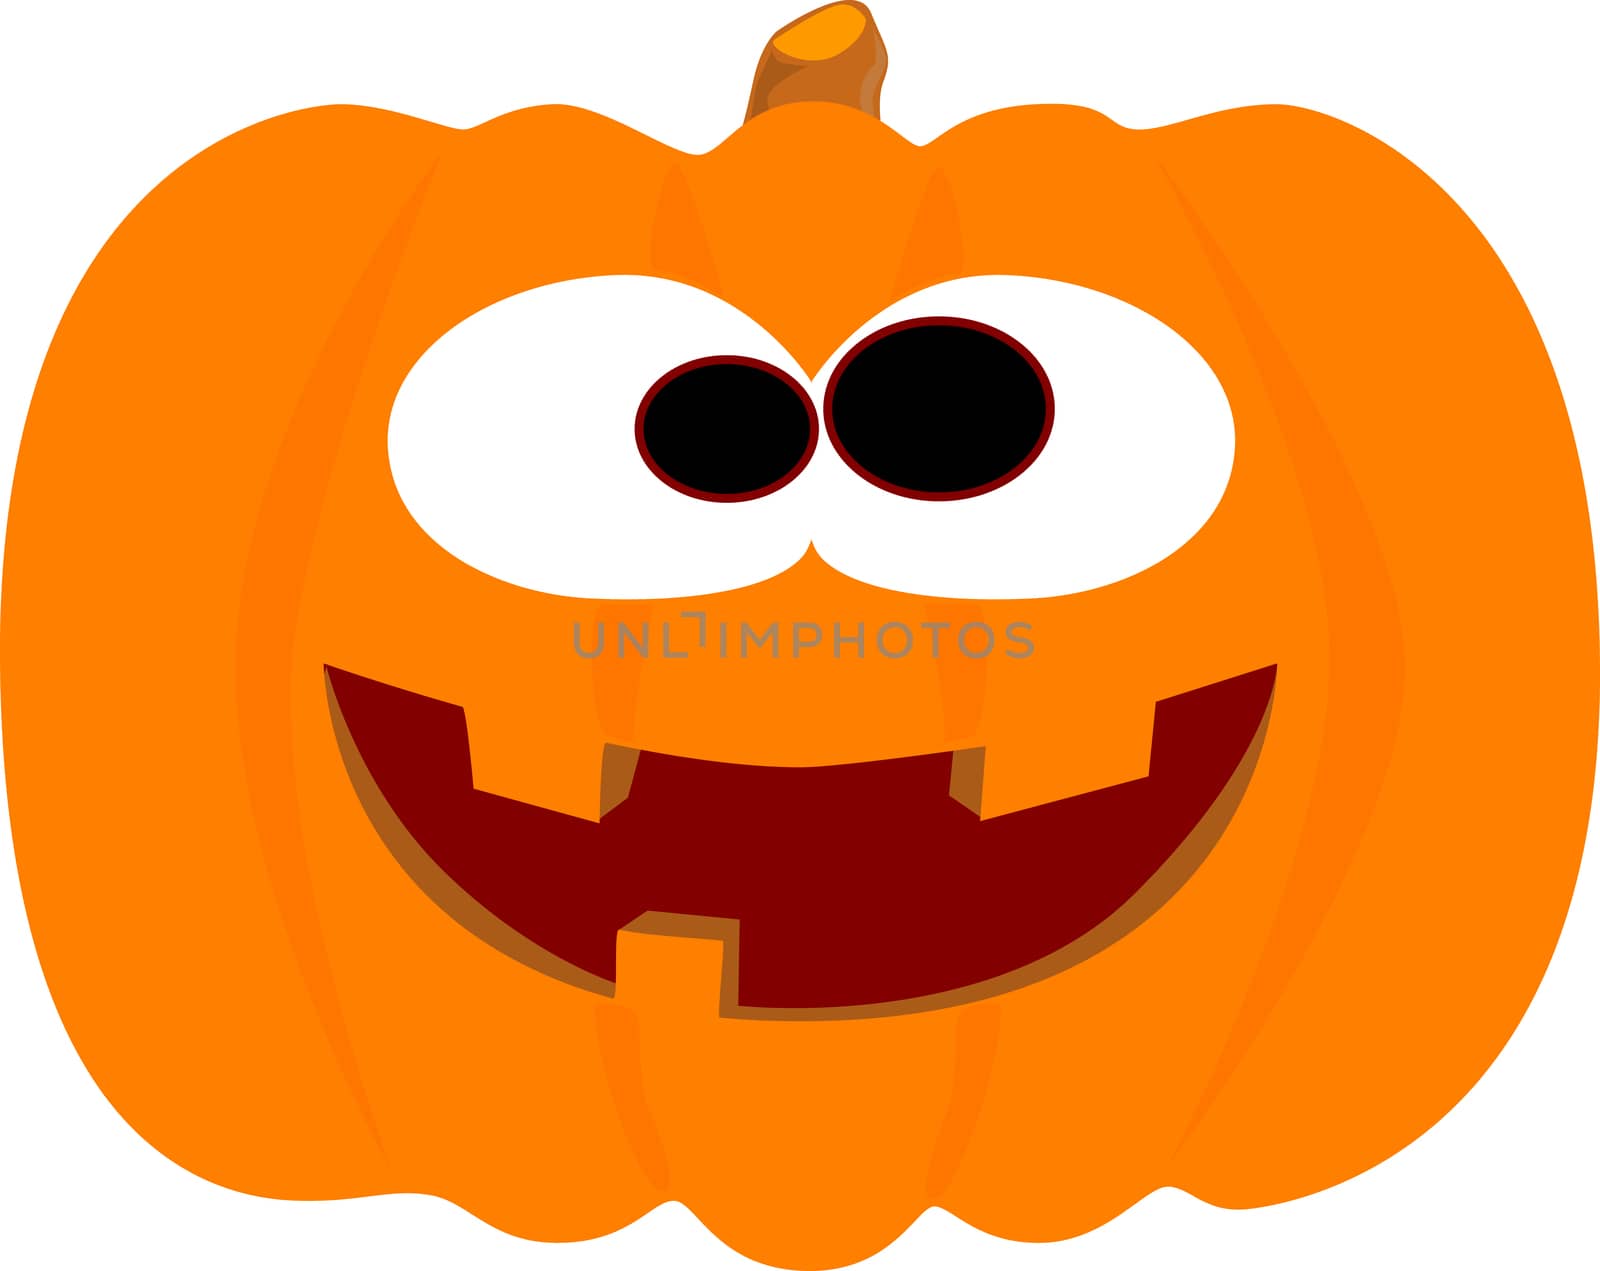 An easily editable, laughing halloween pumpkin.